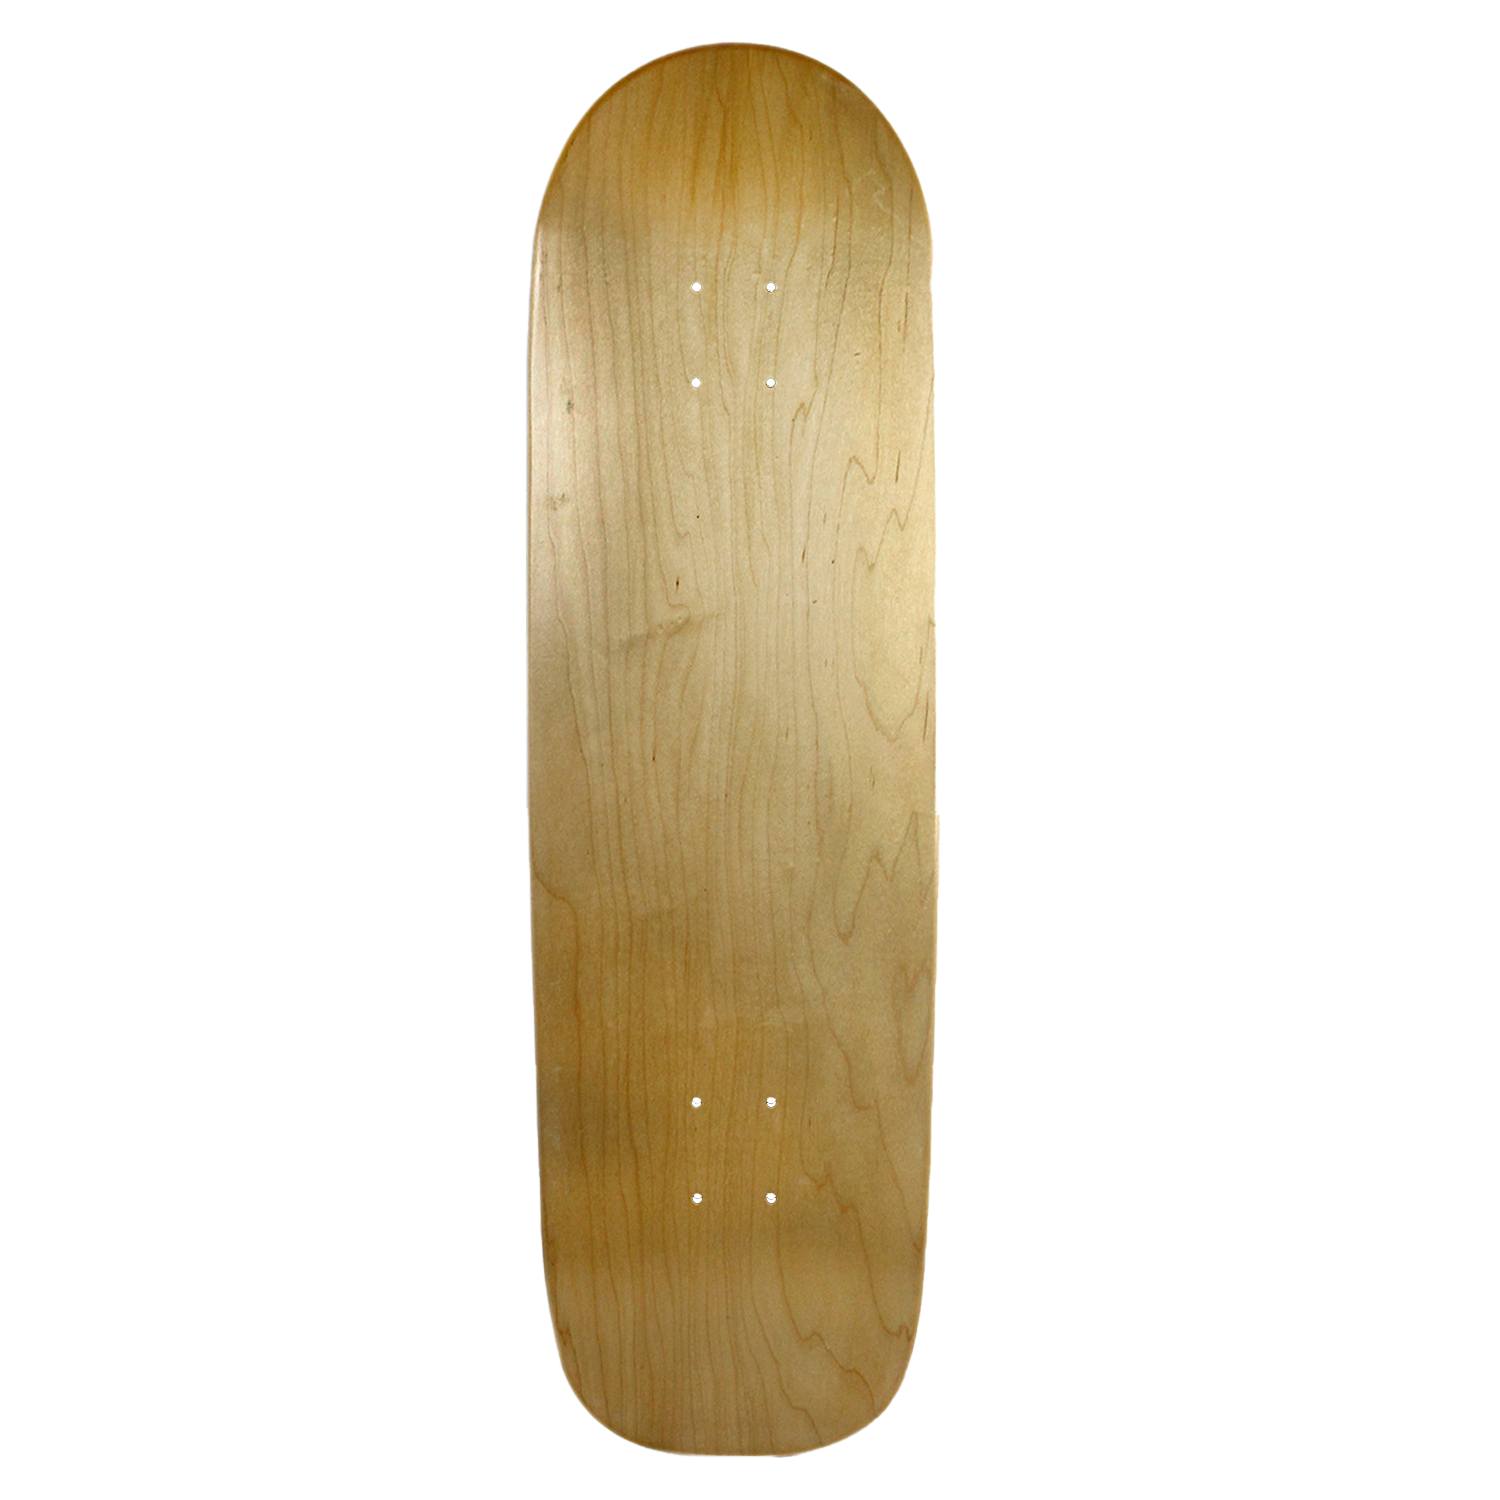 Moose Skateboard Old School Deck Popsicle Nose Natural 8.75in x 32.5in